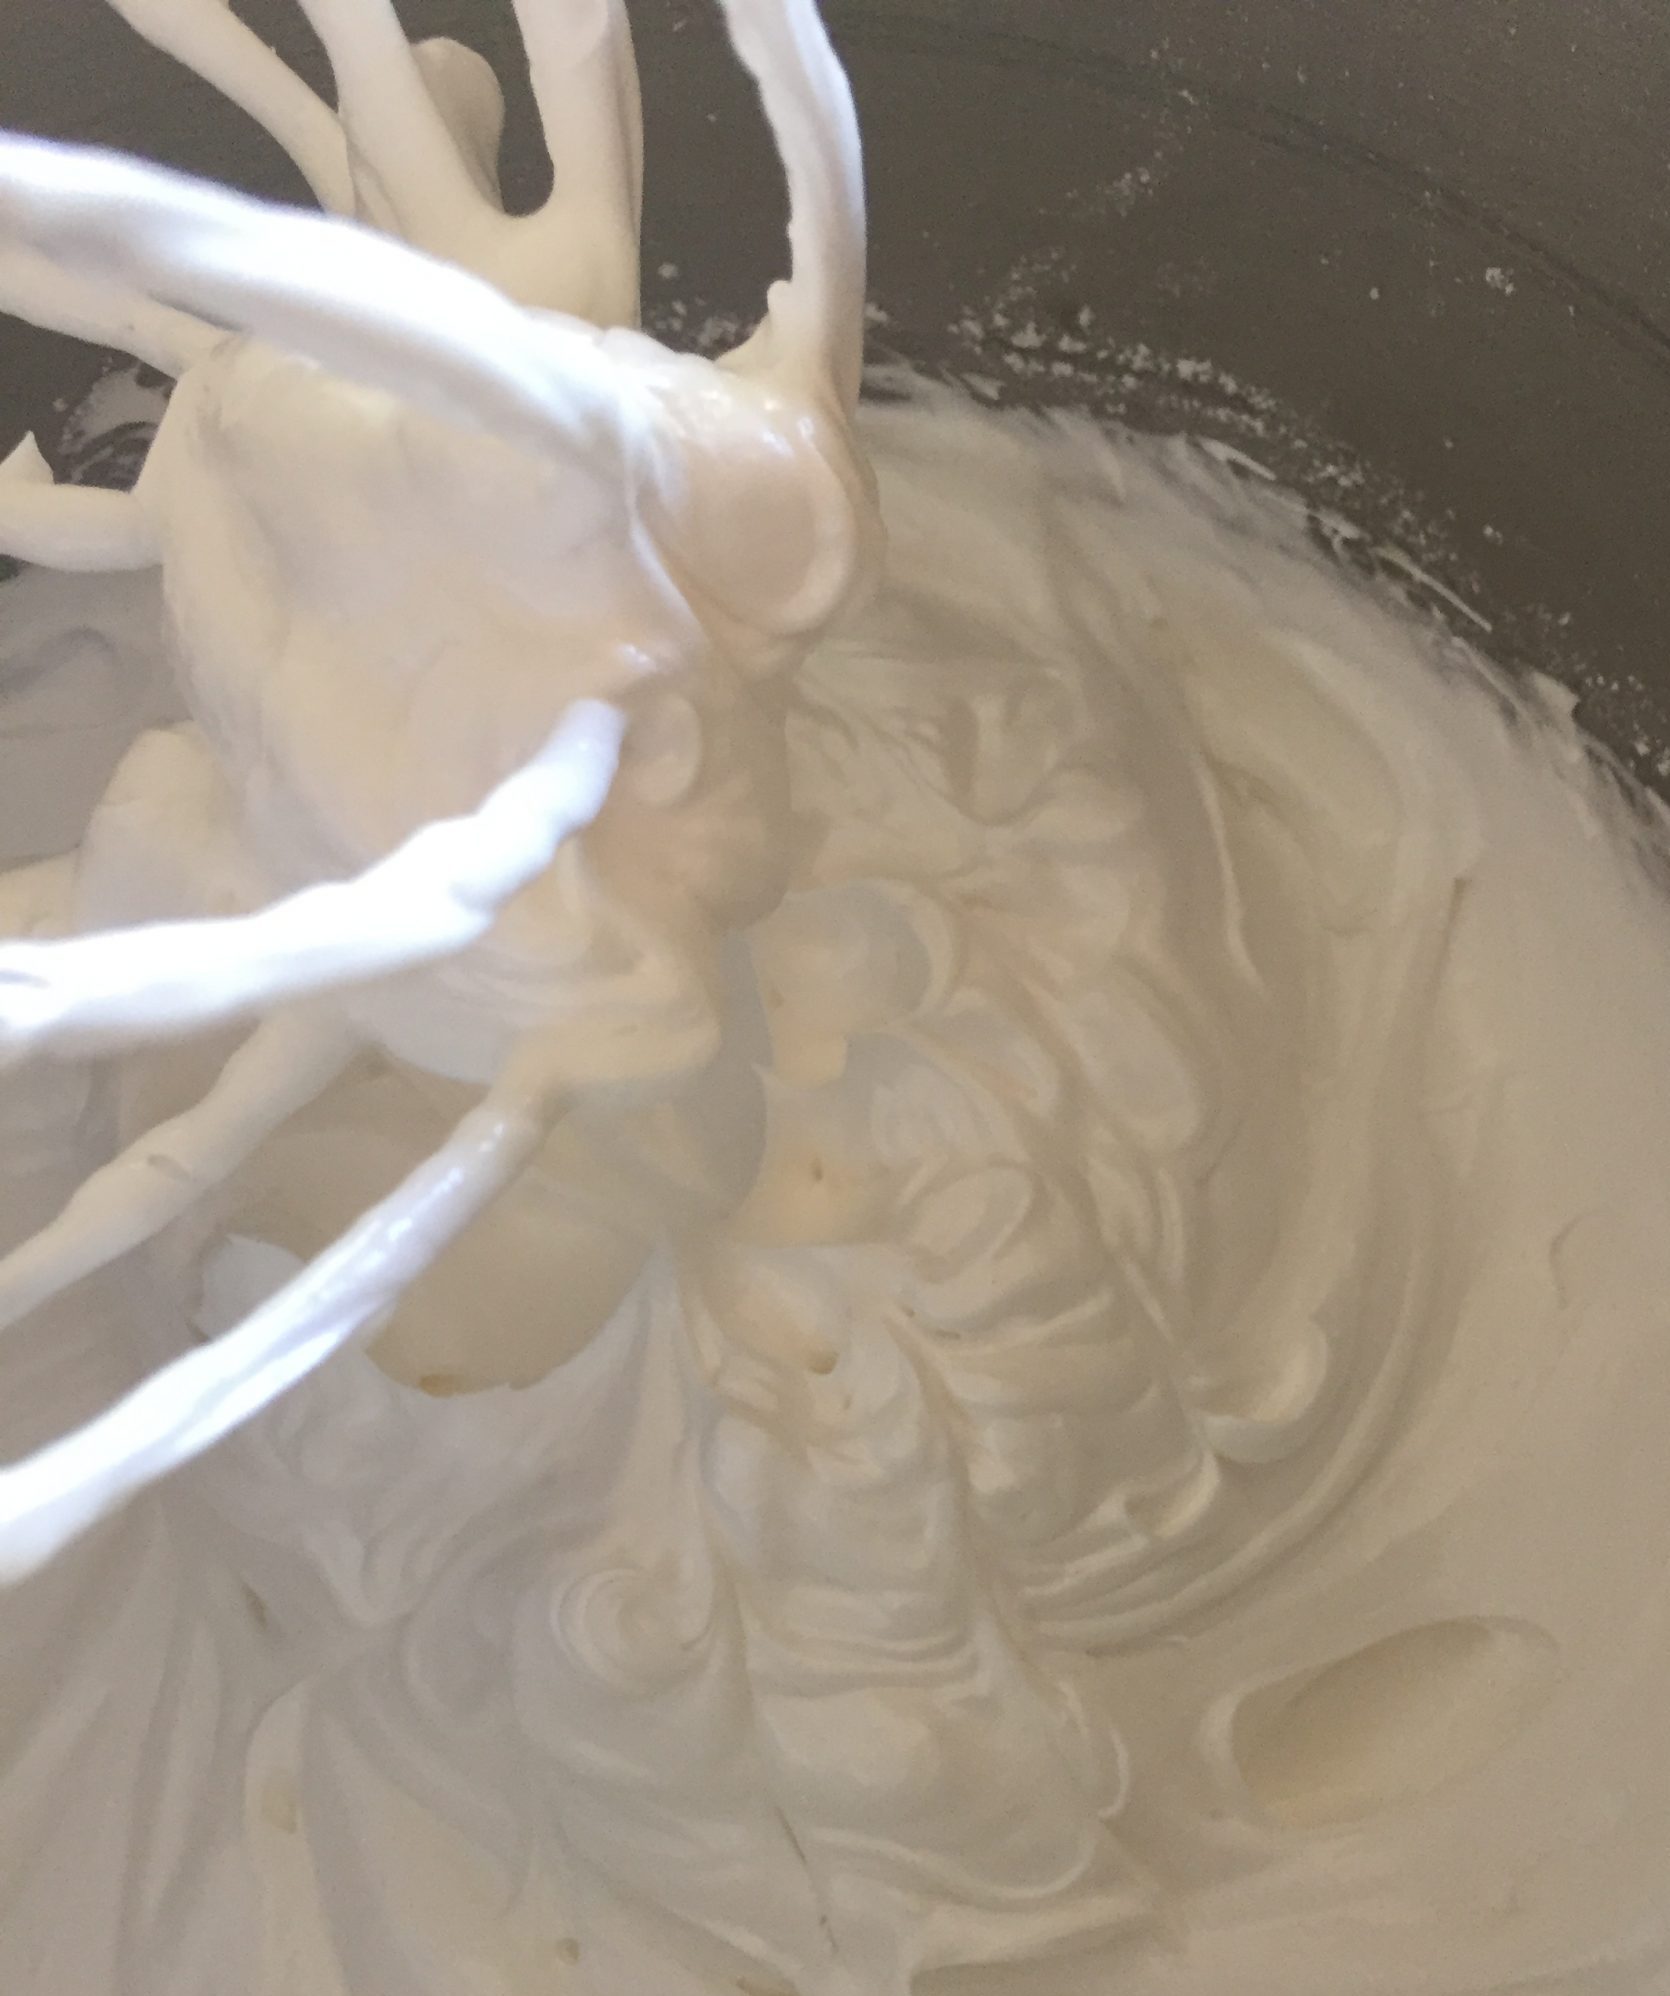 Pavlova recipe whipped firm egg whites with sugar